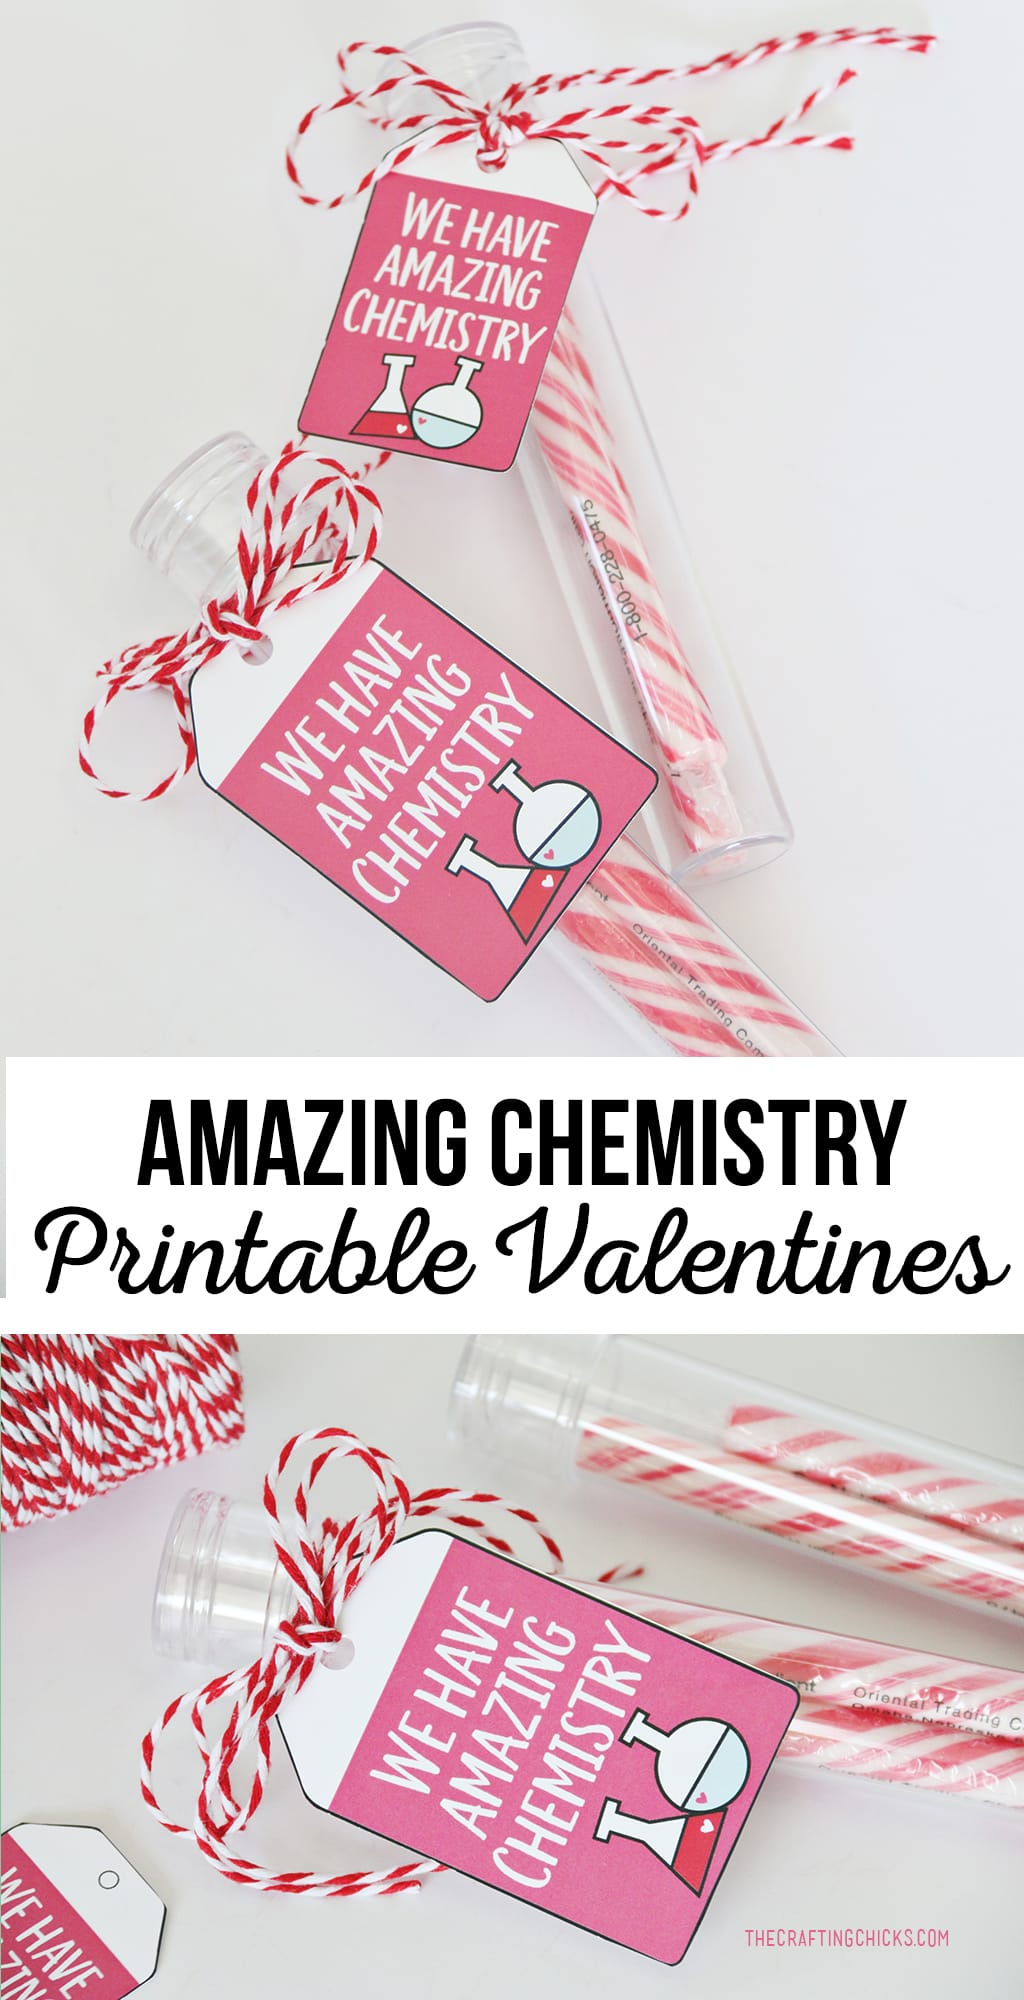 We Have Amazing Chemistry Printable Valentine